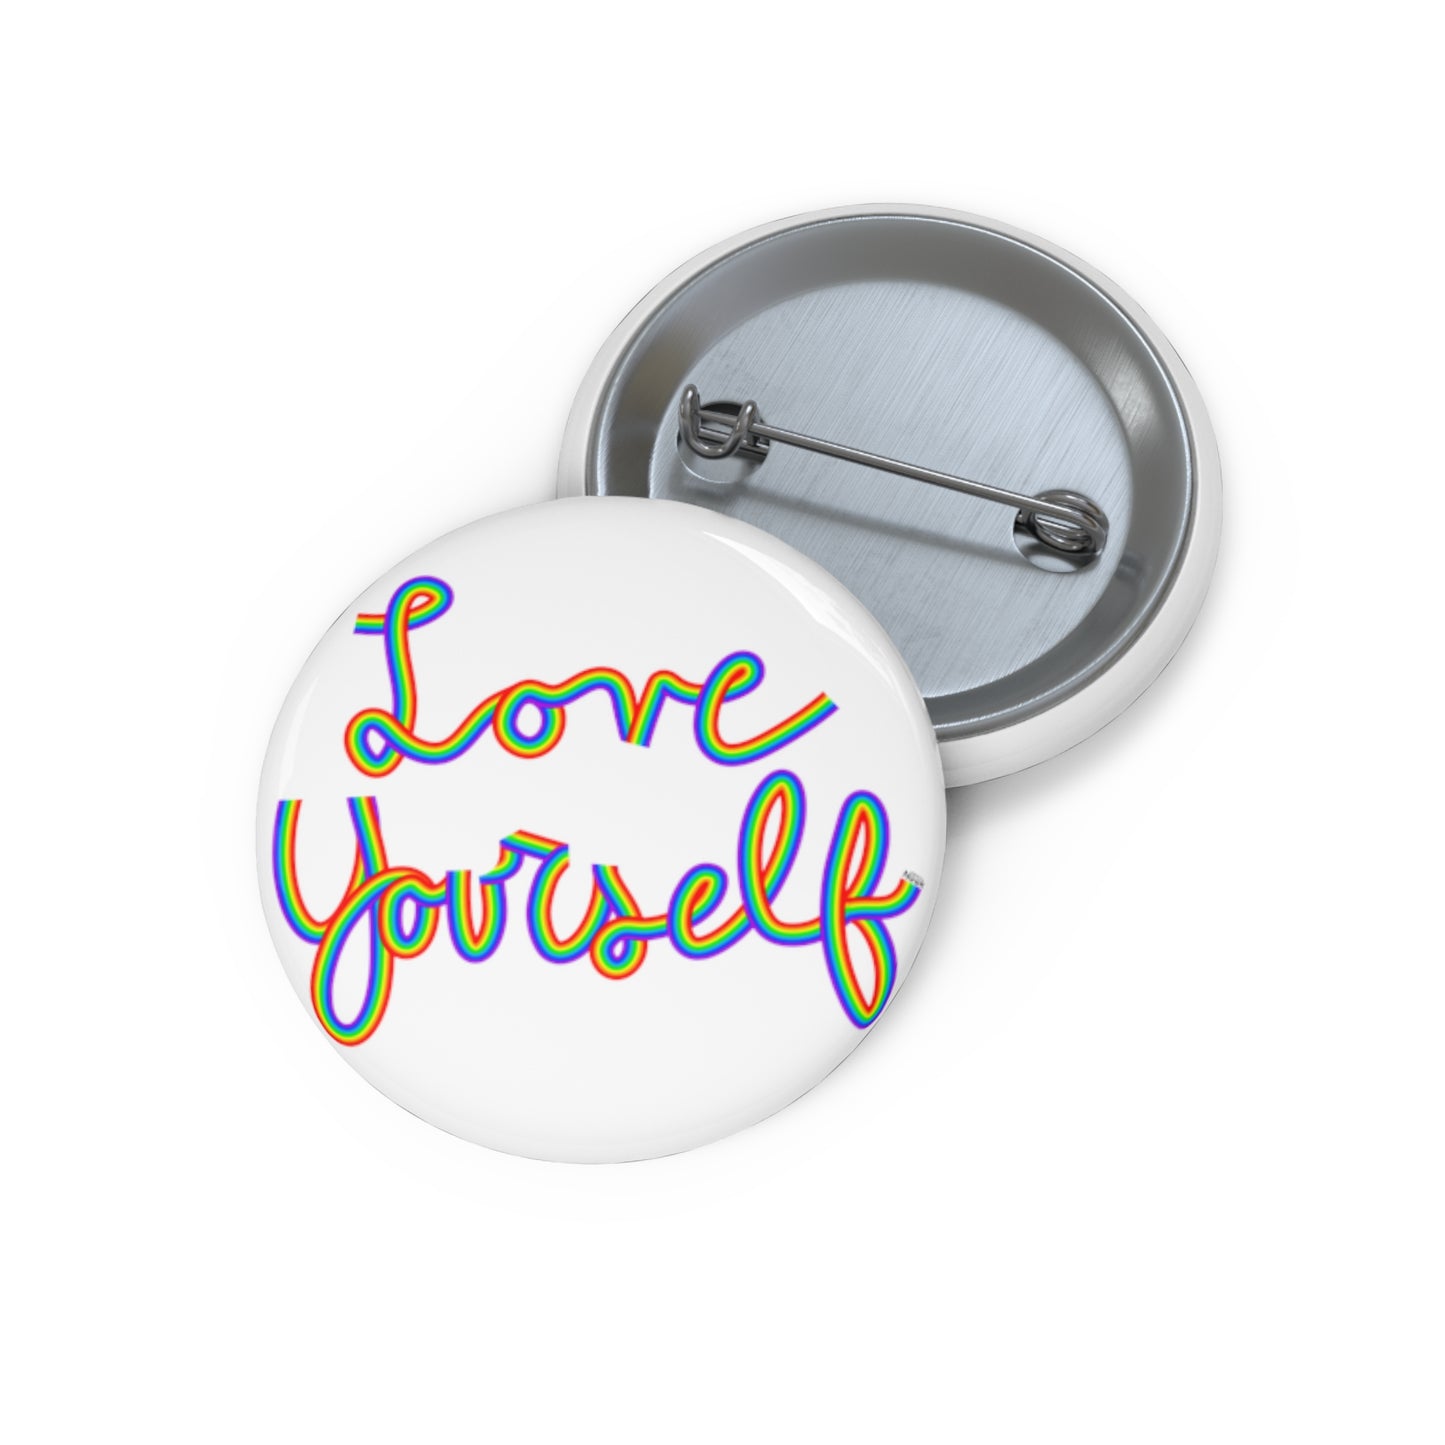 Love Yourself Pin Button | LGBTQIA+ Pride, Self Love, Positive Mindset